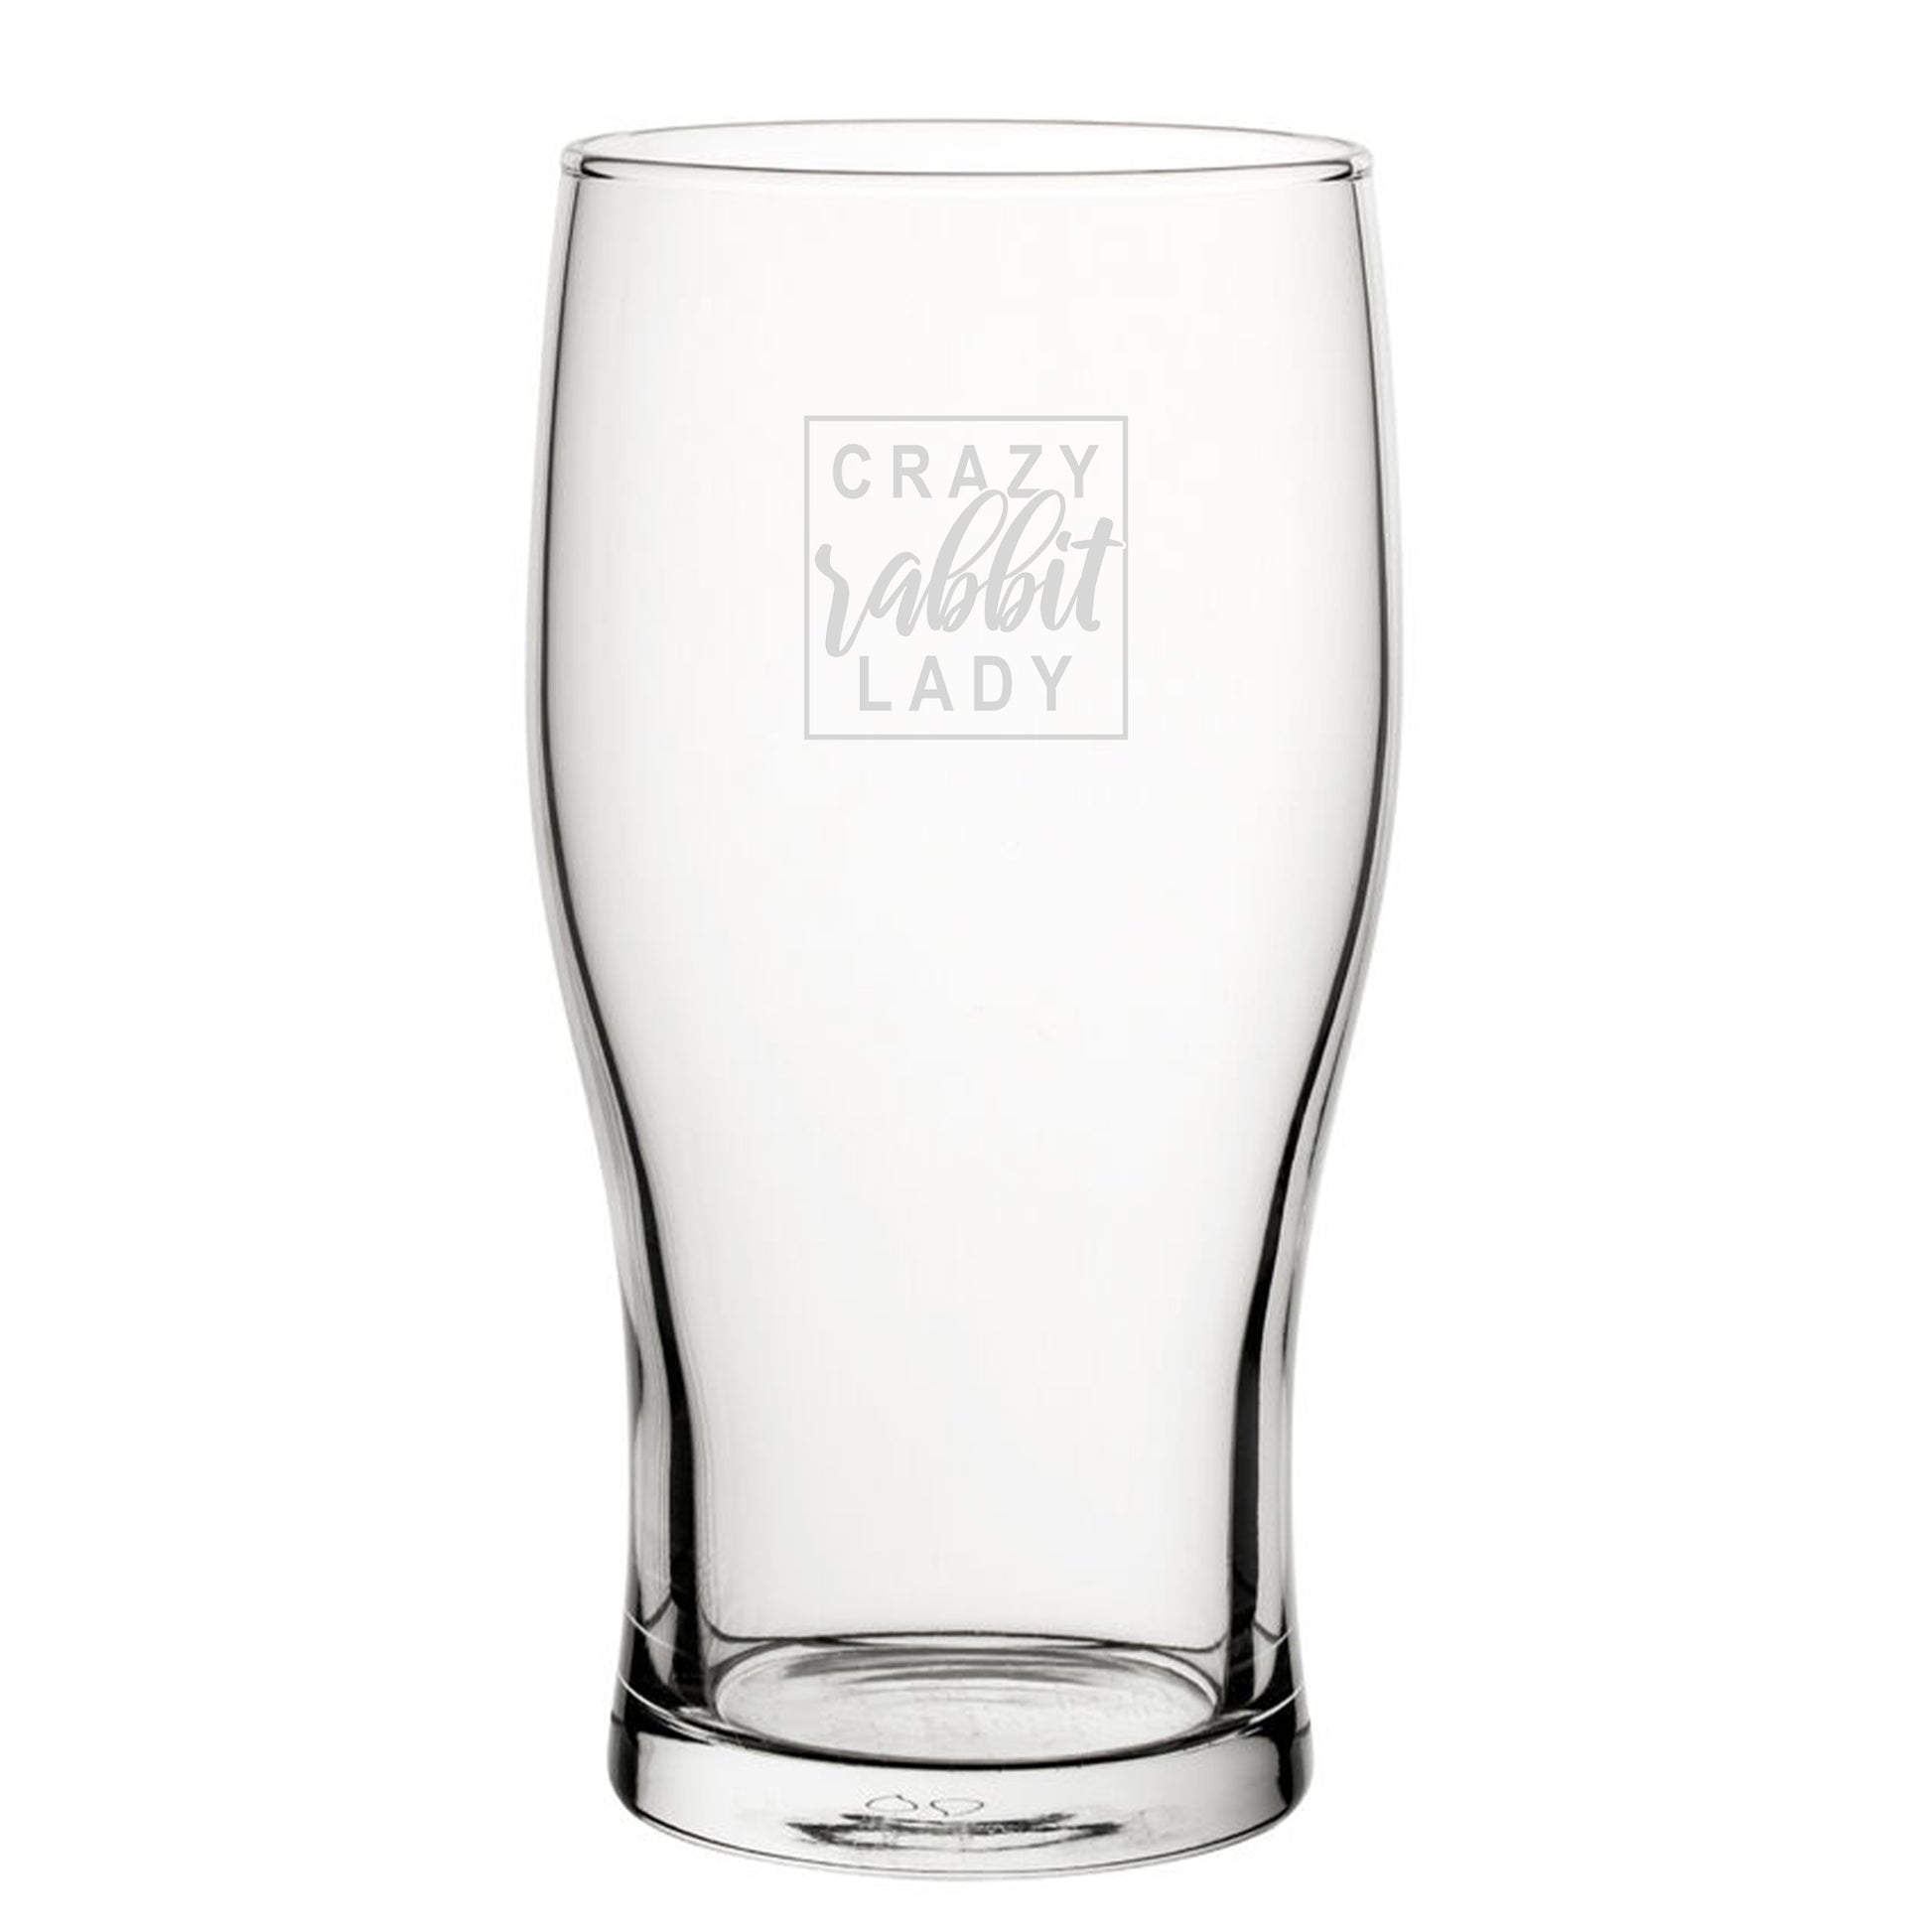 Crazy Rabbit Lady - Engraved Novelty Tulip Pint Glass Image 2